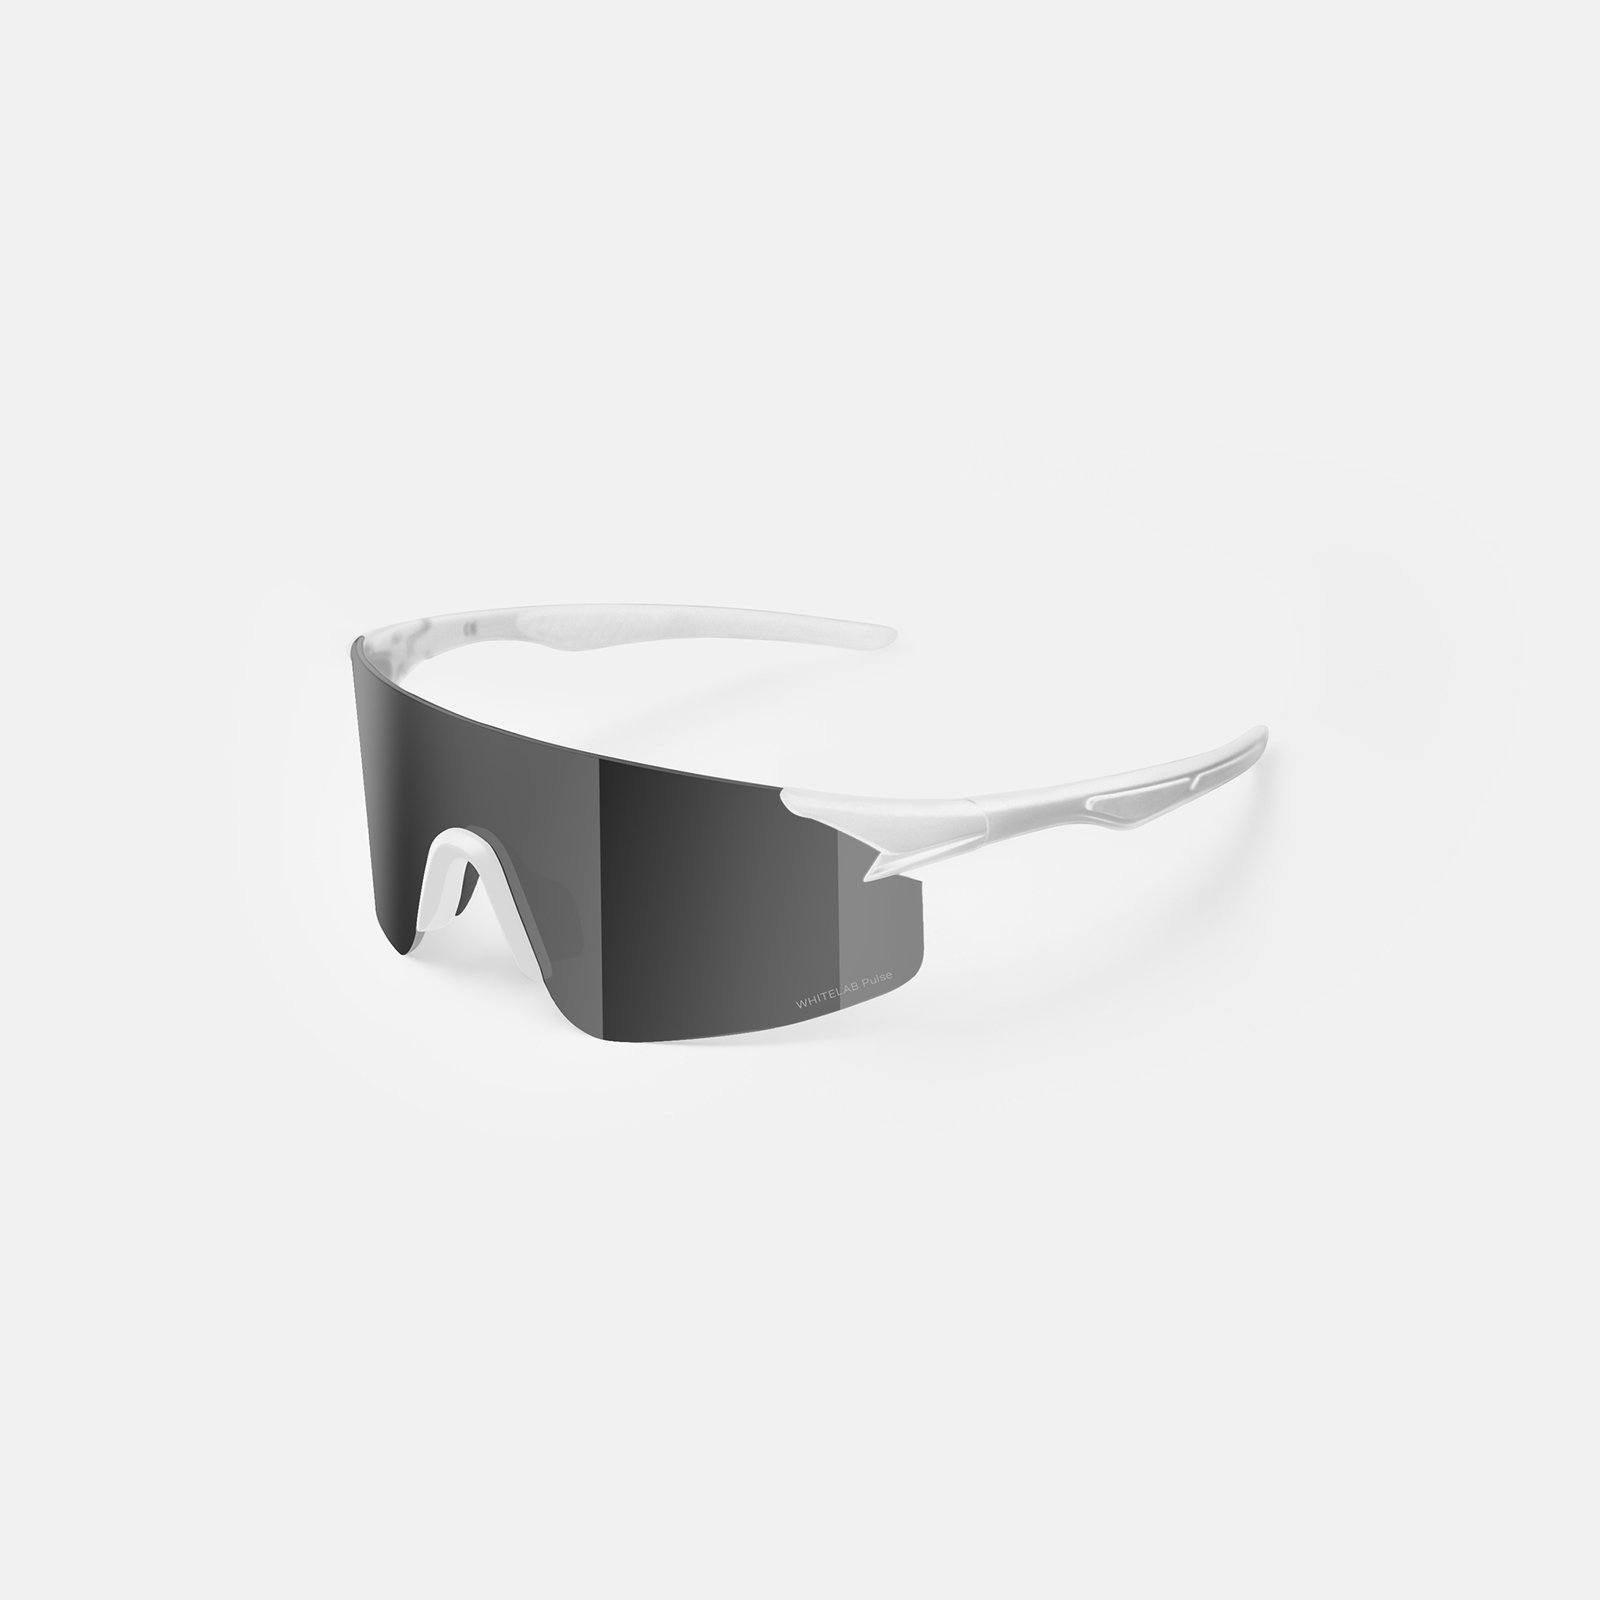  черные солнцезащитные очки White Lab Visor Visor white/black - цена, описание, фото 2